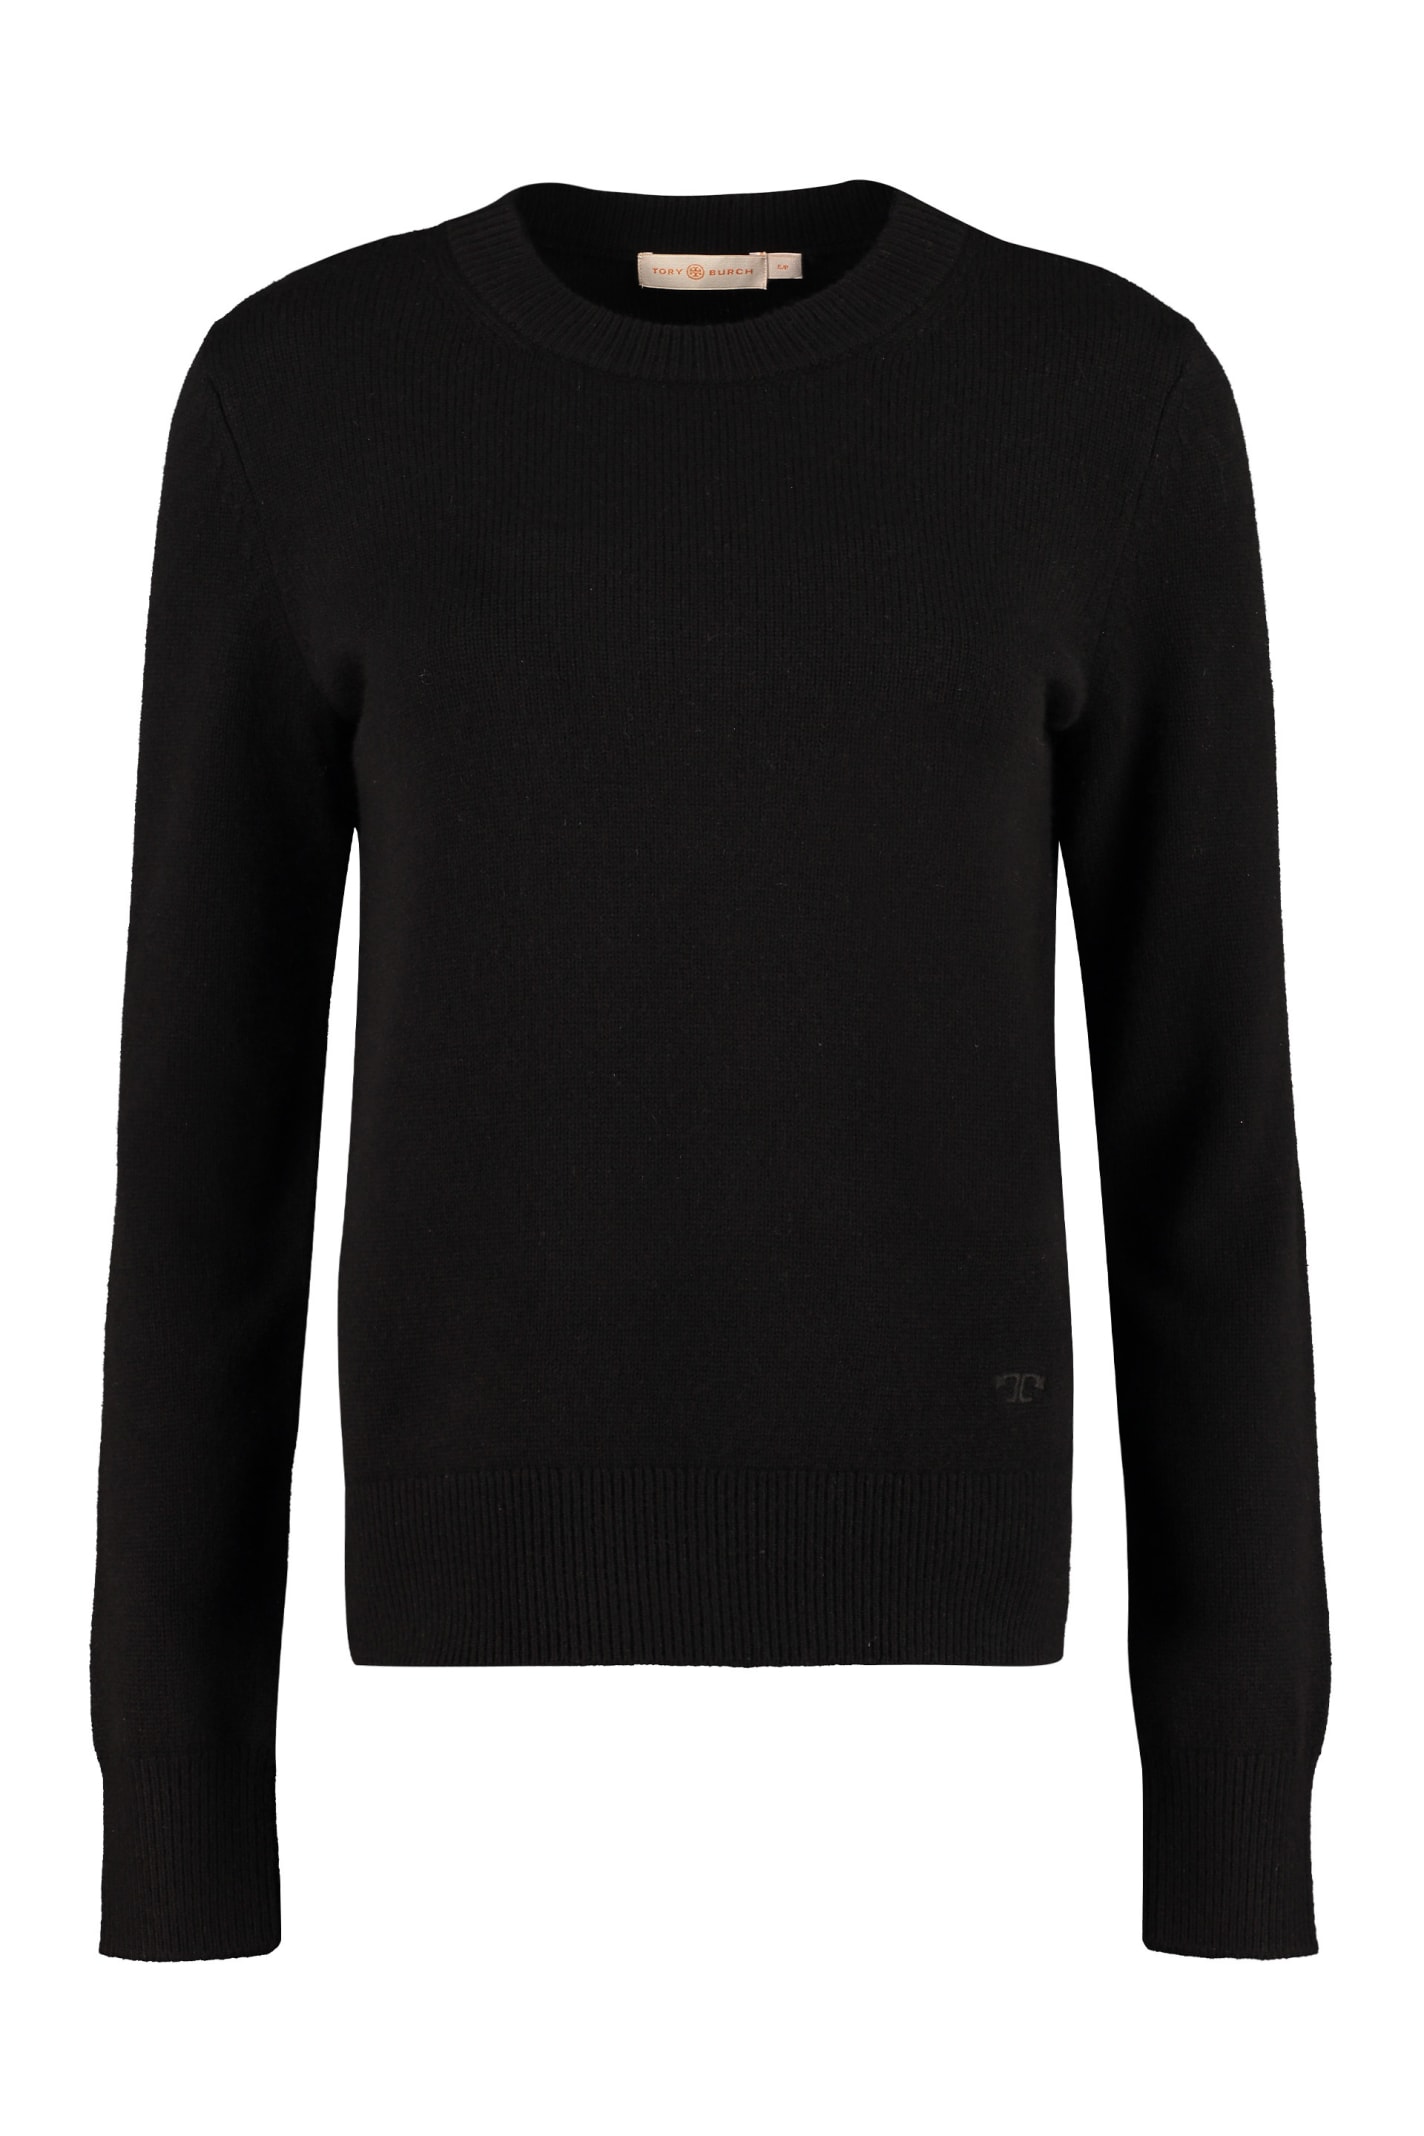 Tory Burch Crew-neck Cashmere Sweater